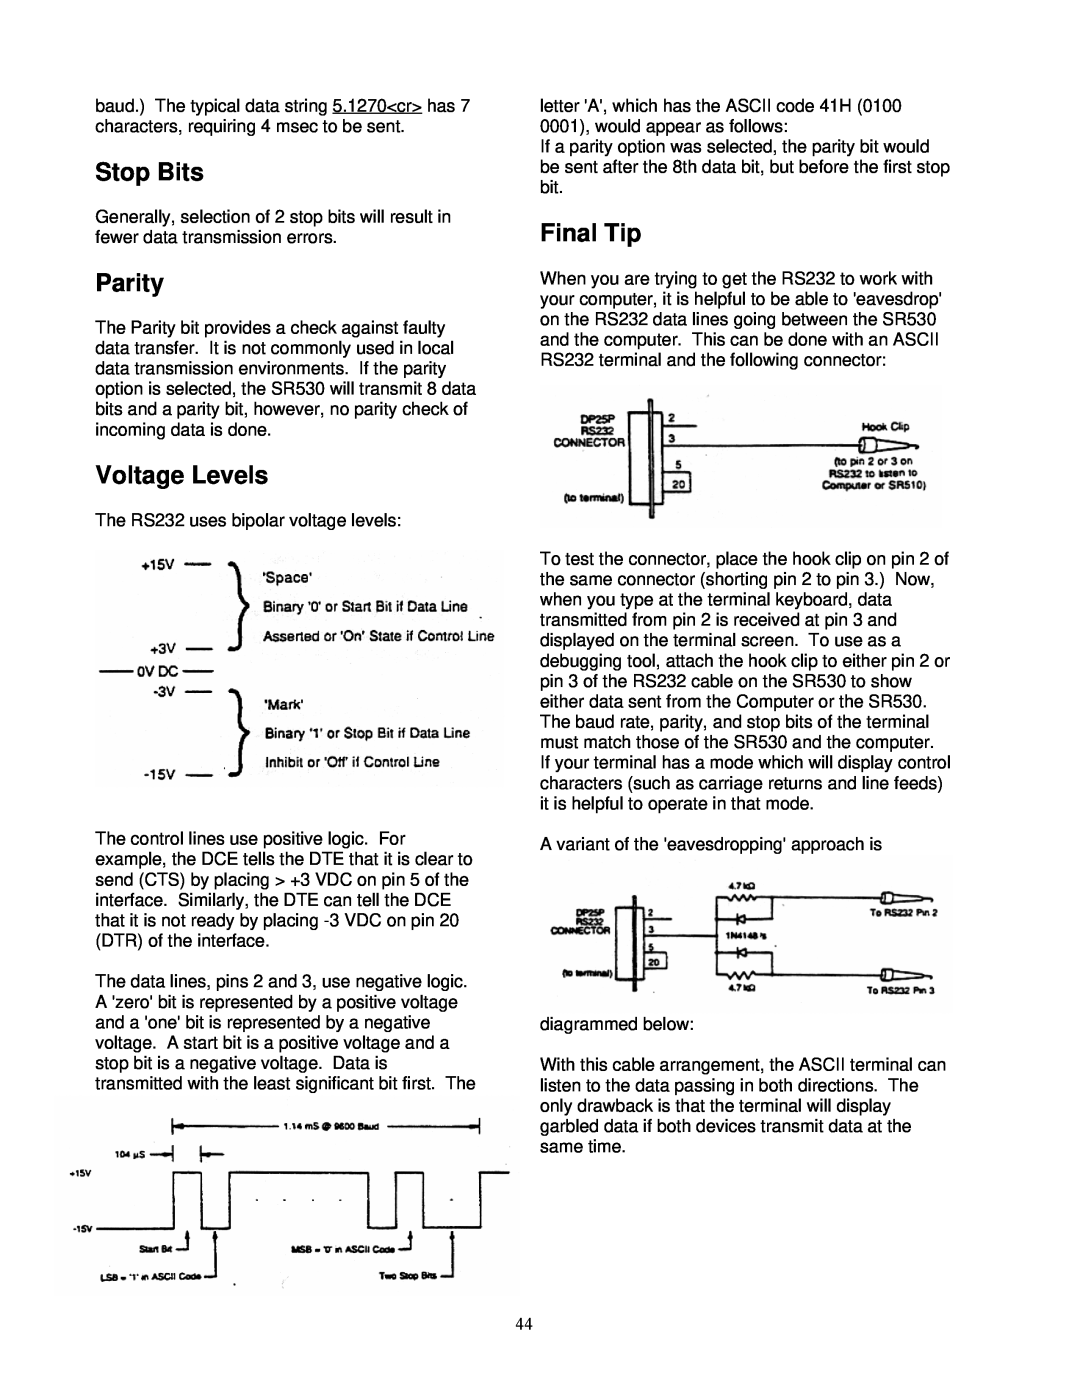 SRS Labs Lock-In Amplifier, SR530 manual Stop Bits, Parity, Voltage Levels, Final Tip 